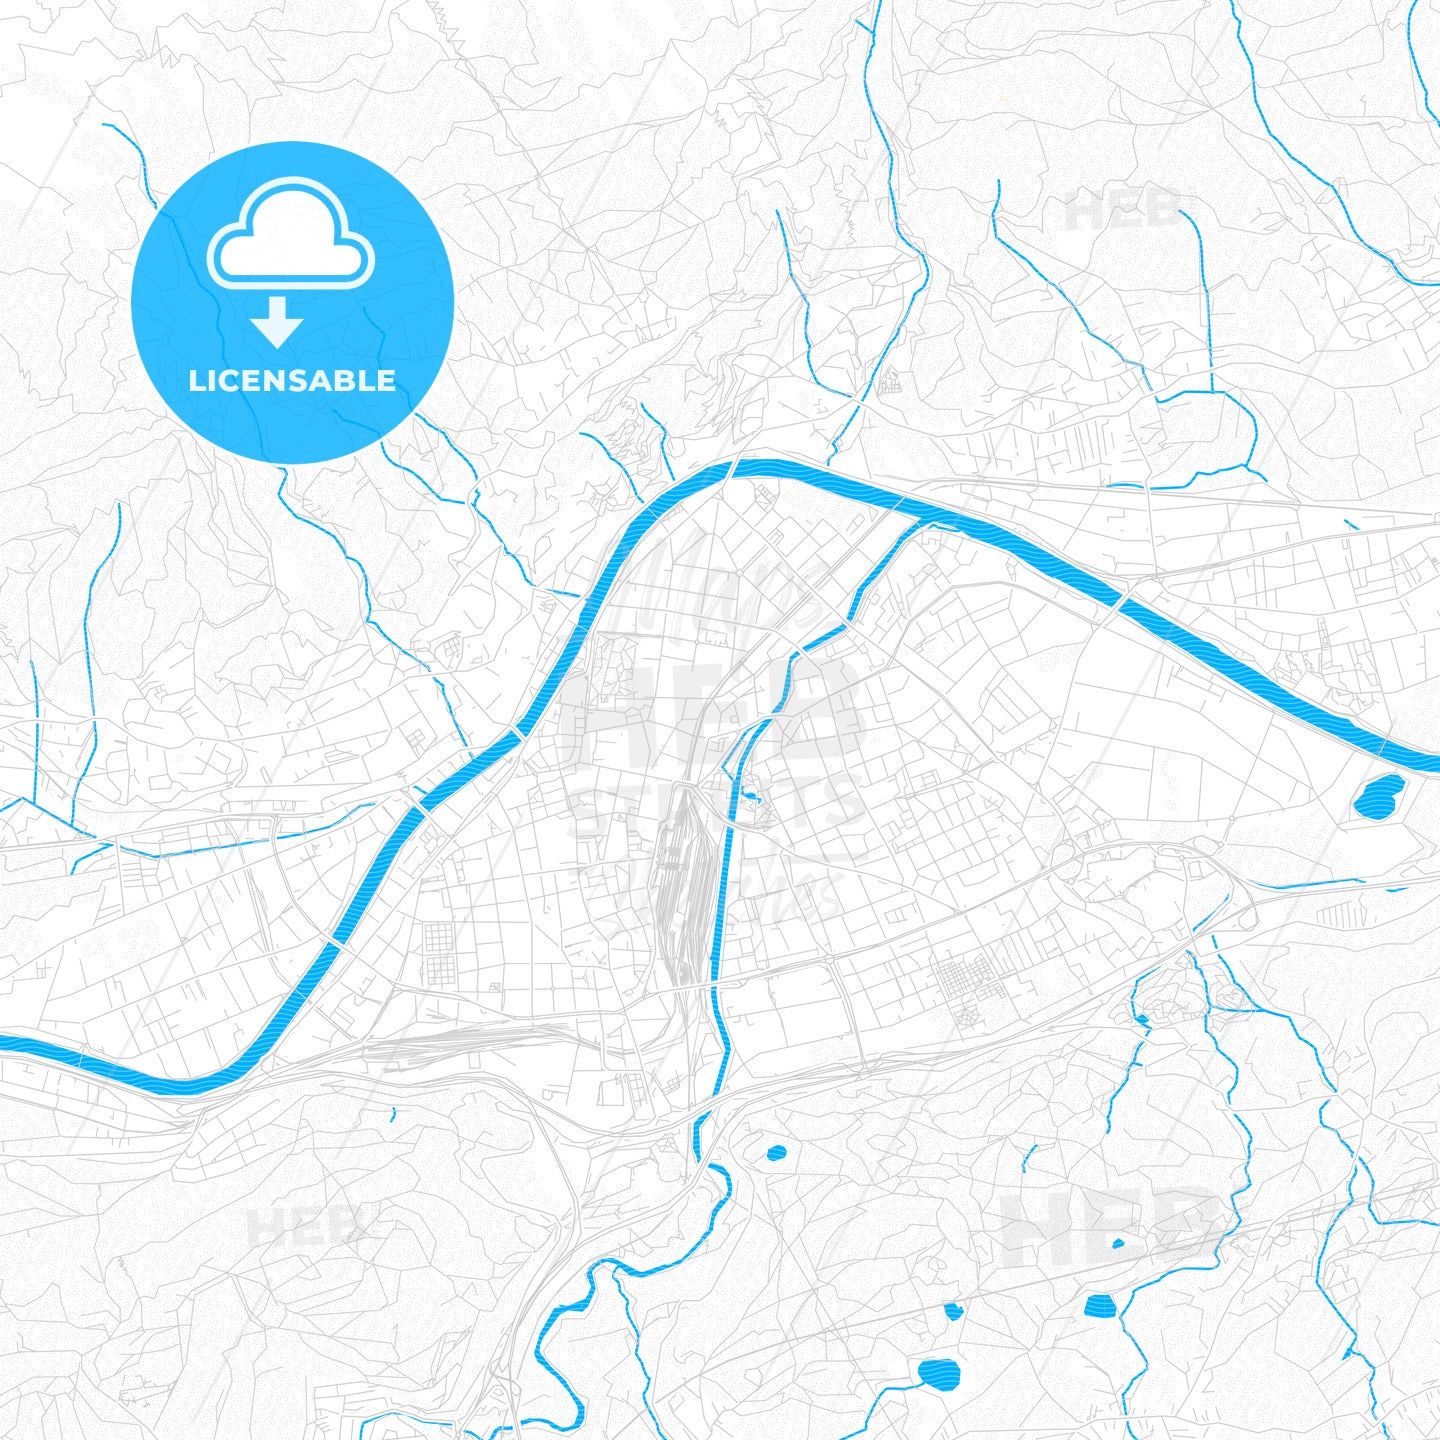 Innsbruck, Austria PDF vector map with water in focus